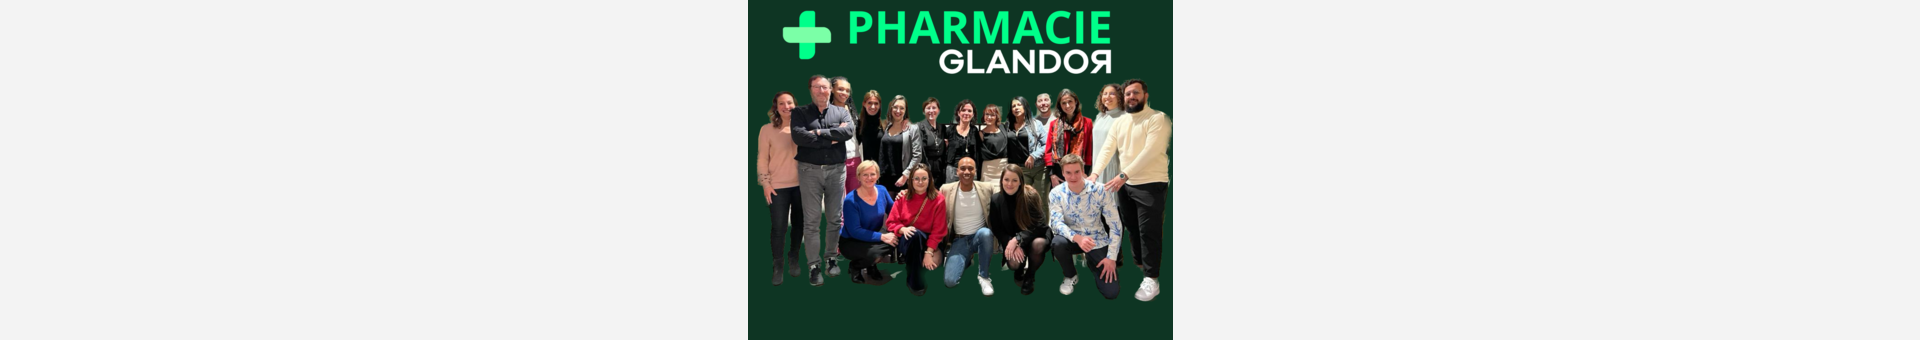 Pharmacie Glandor,CEPET